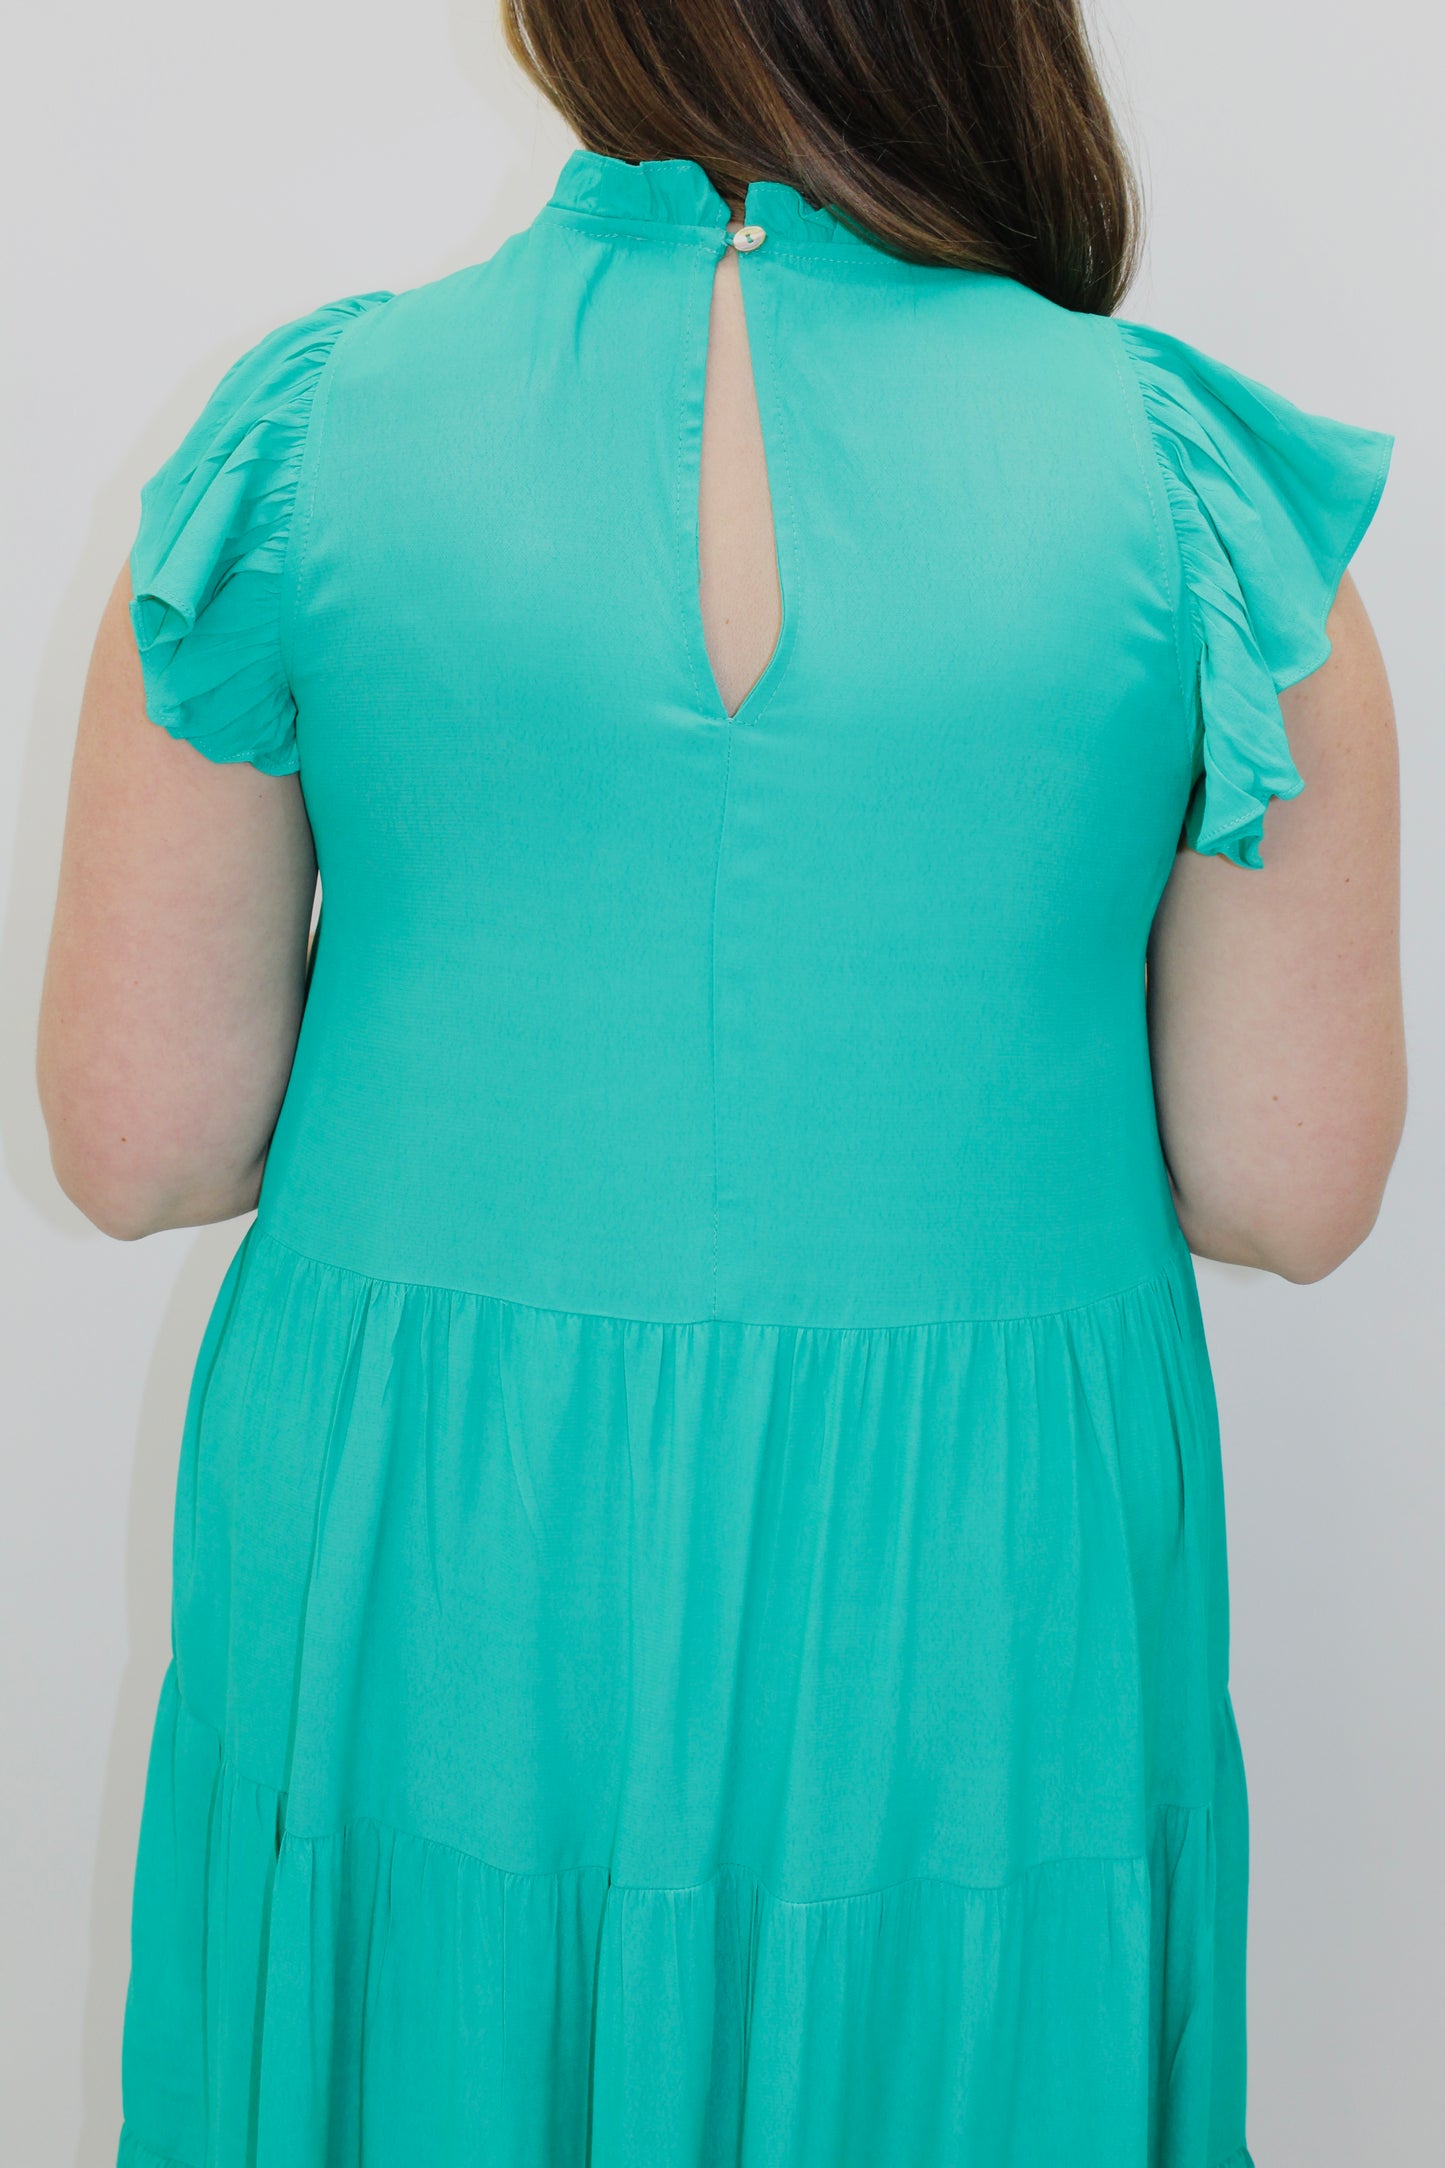 The Kelly Green Tiered Midi Dress